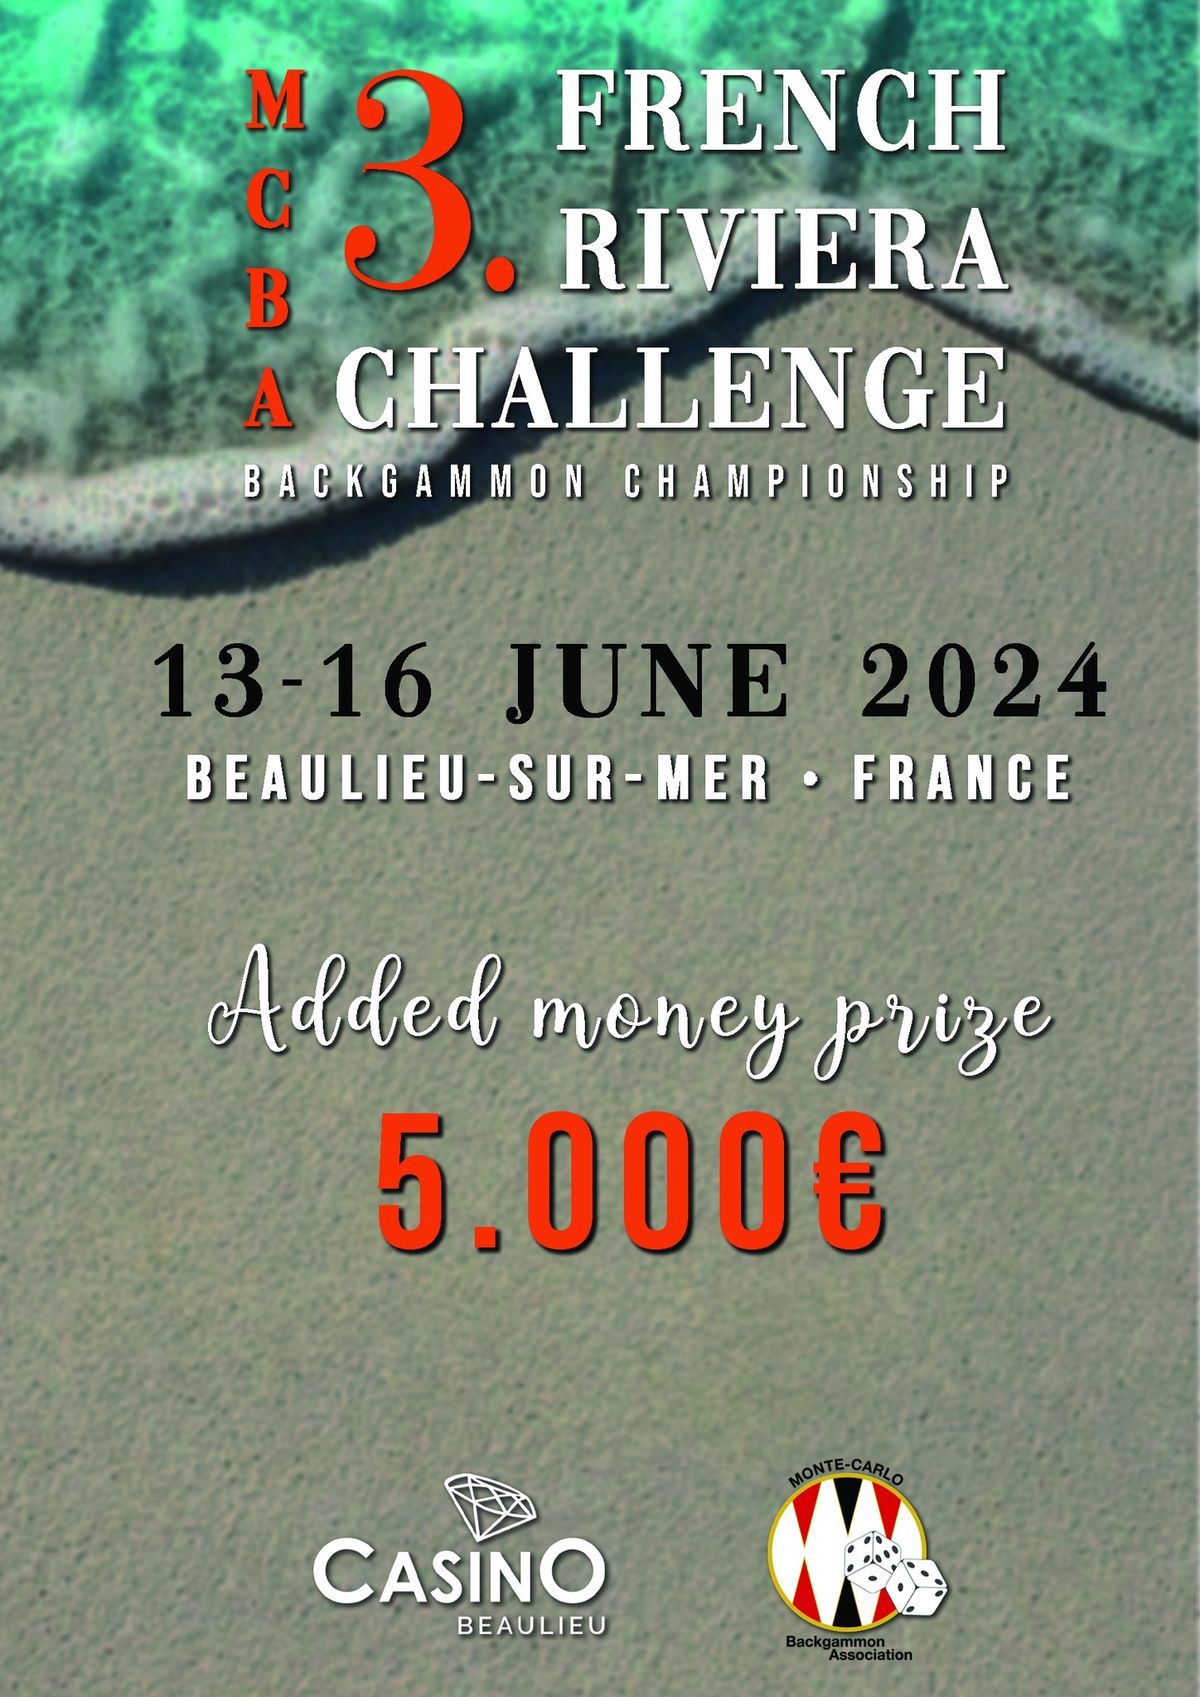 3RD FRENCH RIVIERA CHALLENGE INTERNATIONAL BACKGAMMON CHAMPIONSHIP